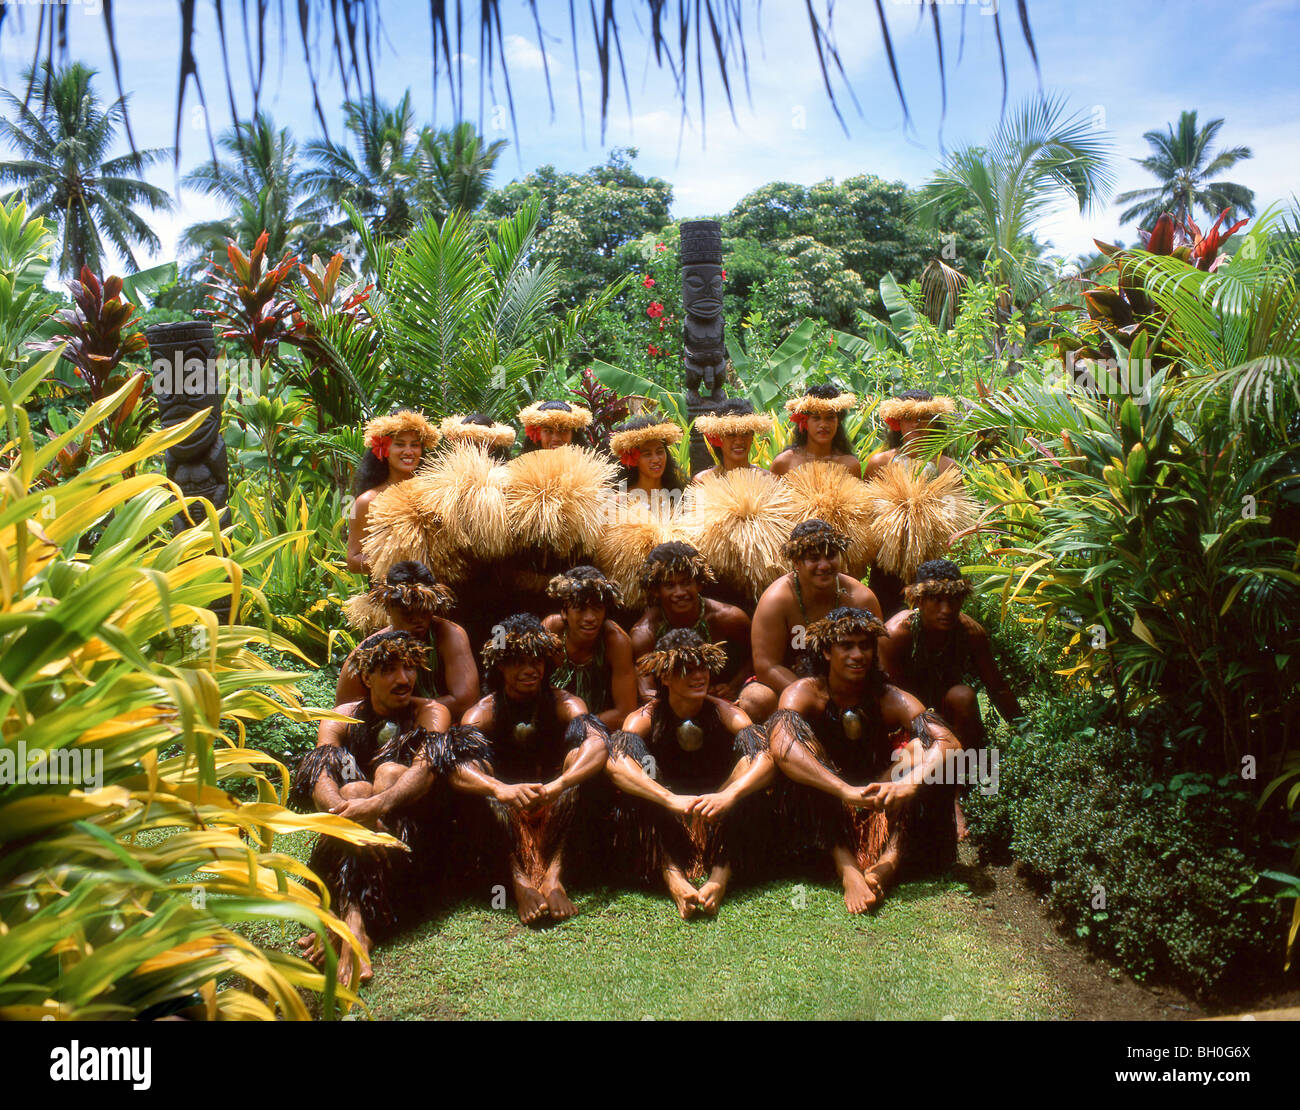 Danza Polinesiana troupe in giardini, Rarotonga Isole Cook Foto Stock